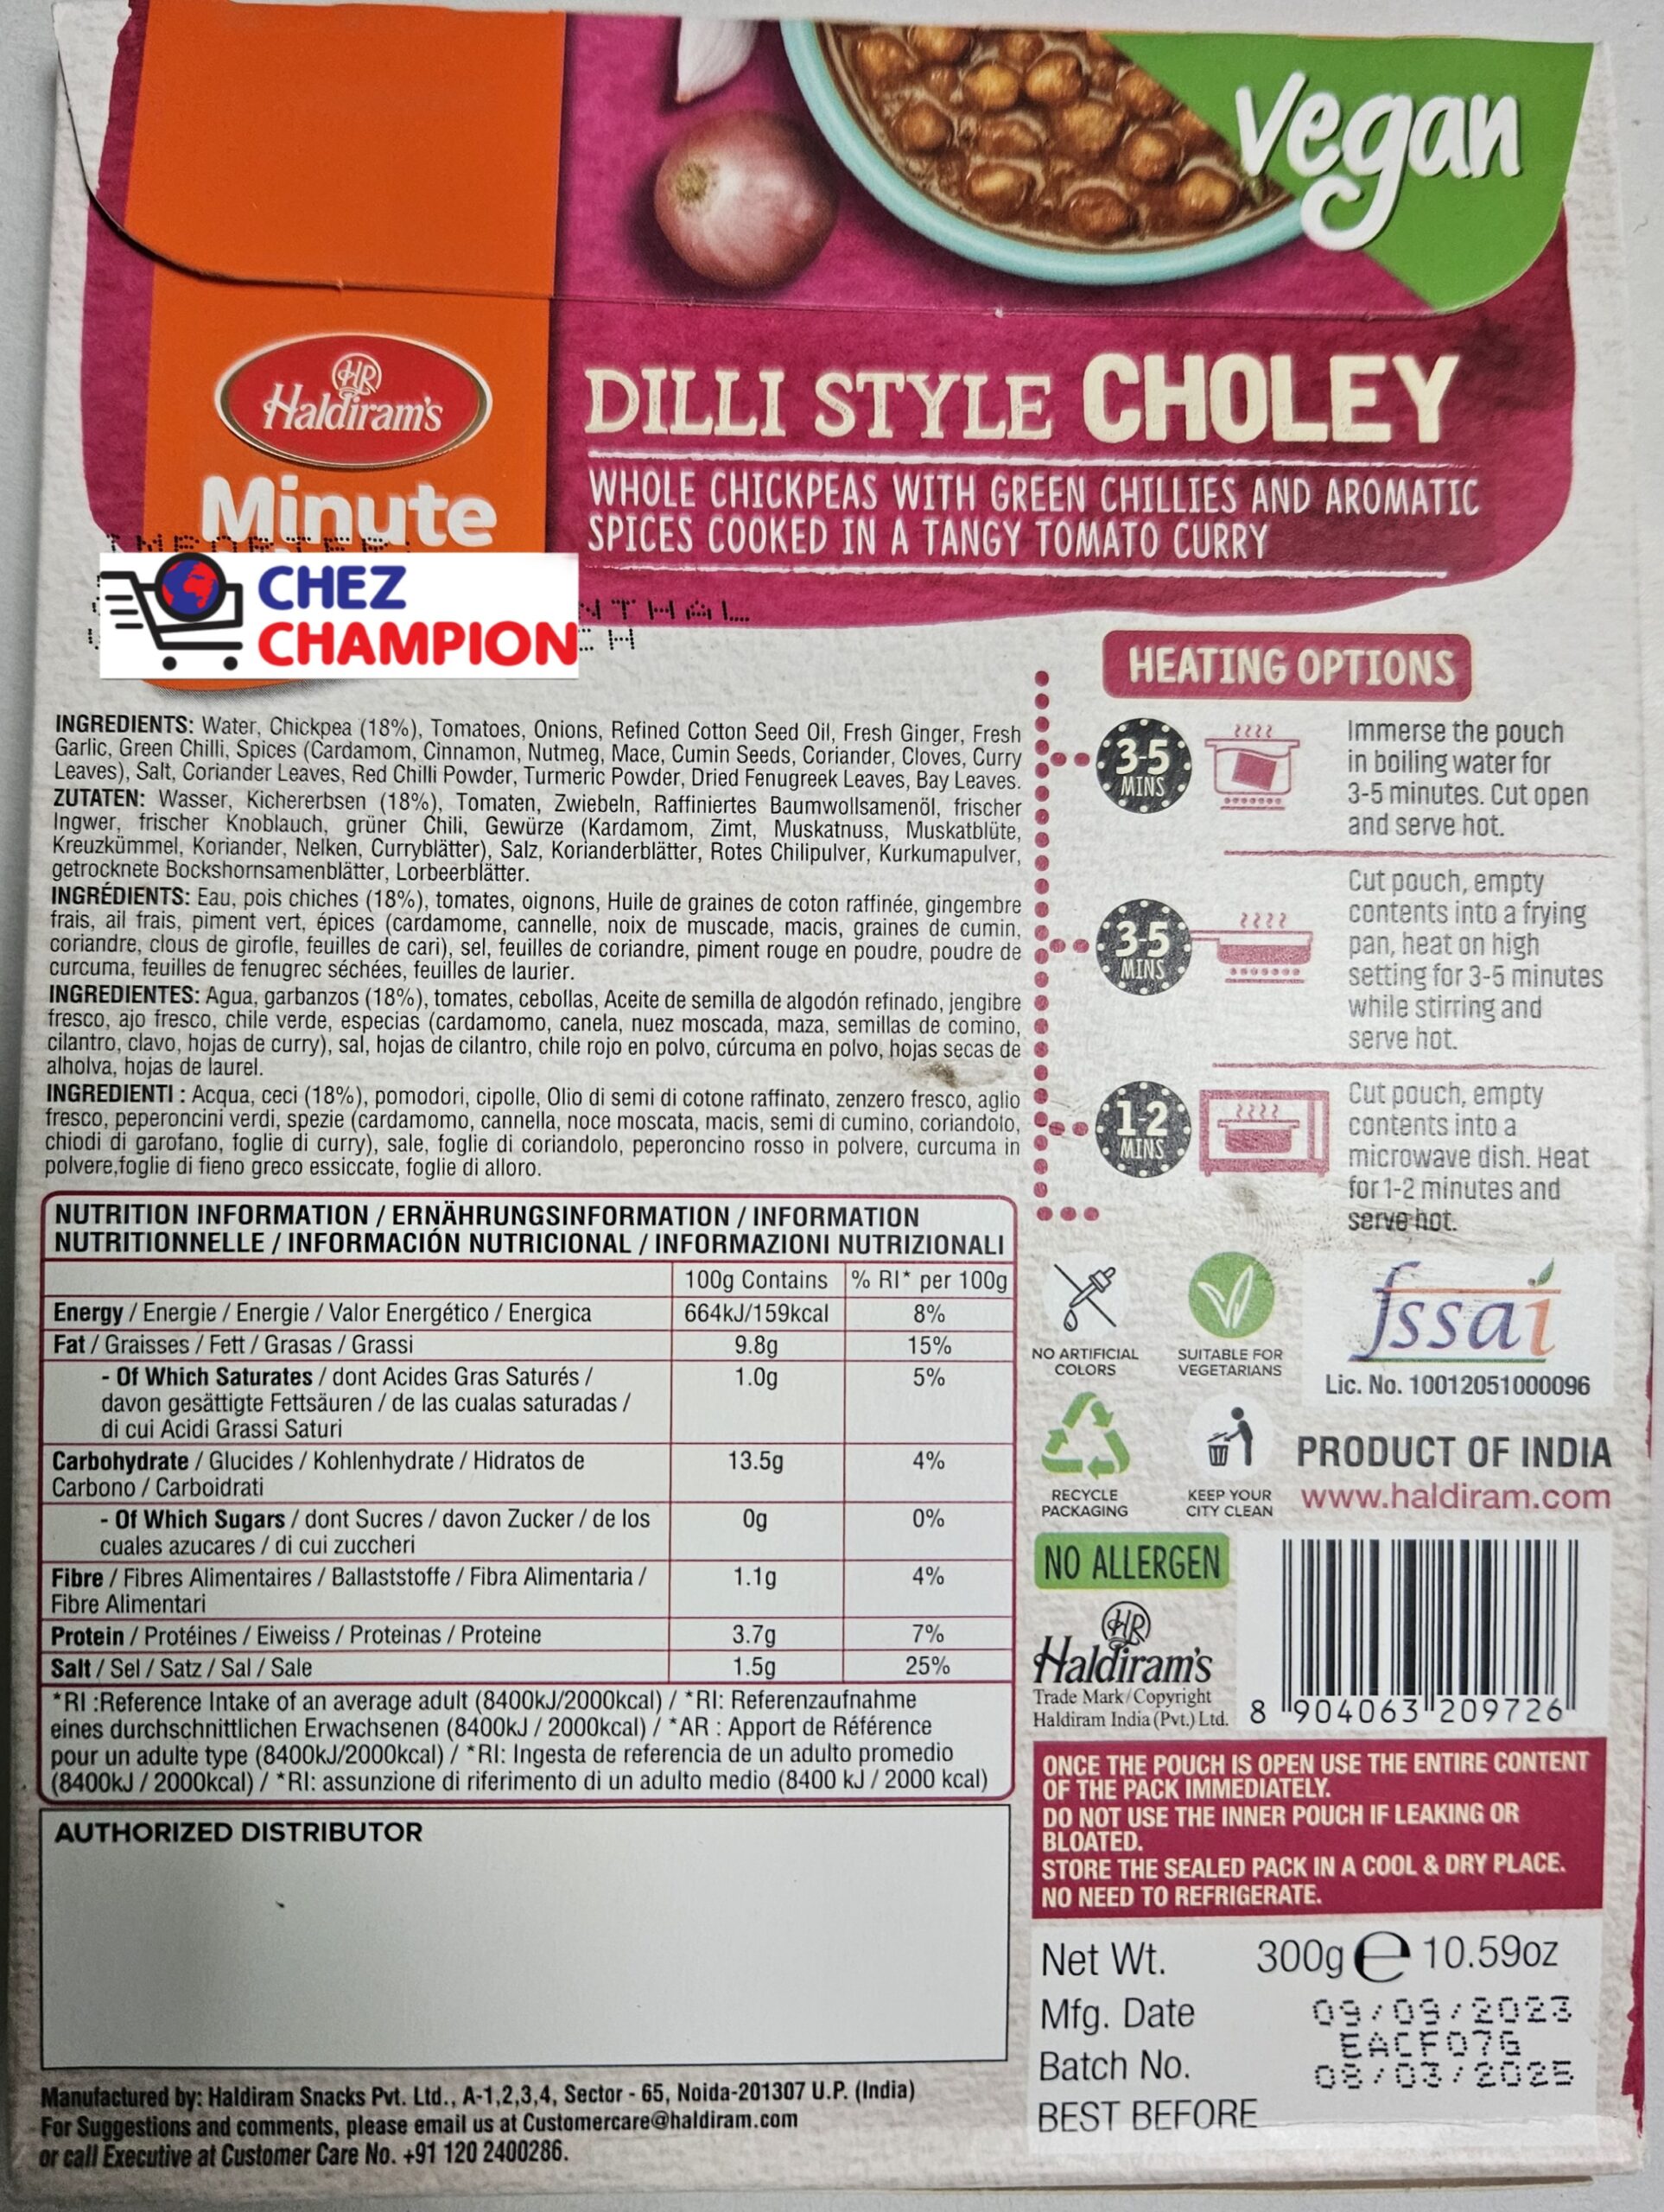 Haldiram’s dilli style choley – 300g